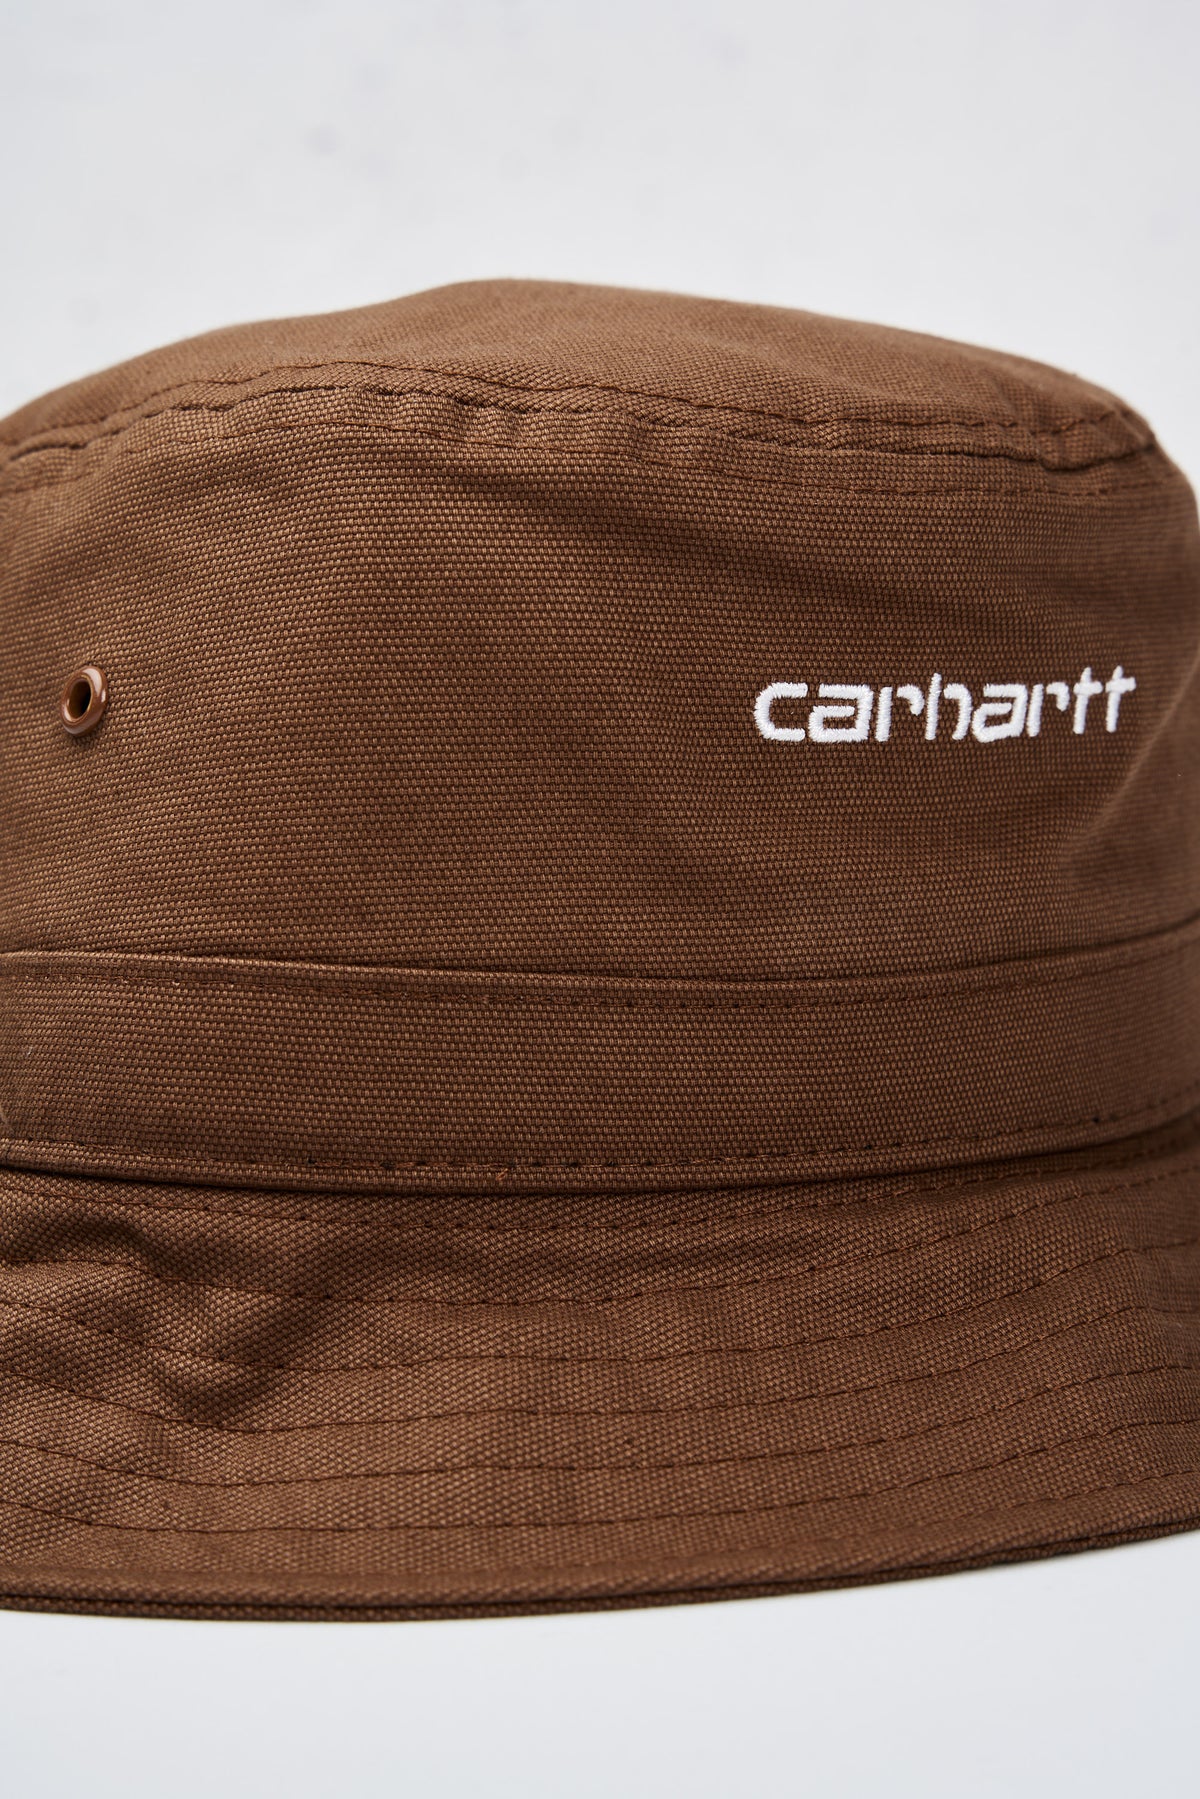 Carhartt Script Bucket Hat Bianco Unisex - 2